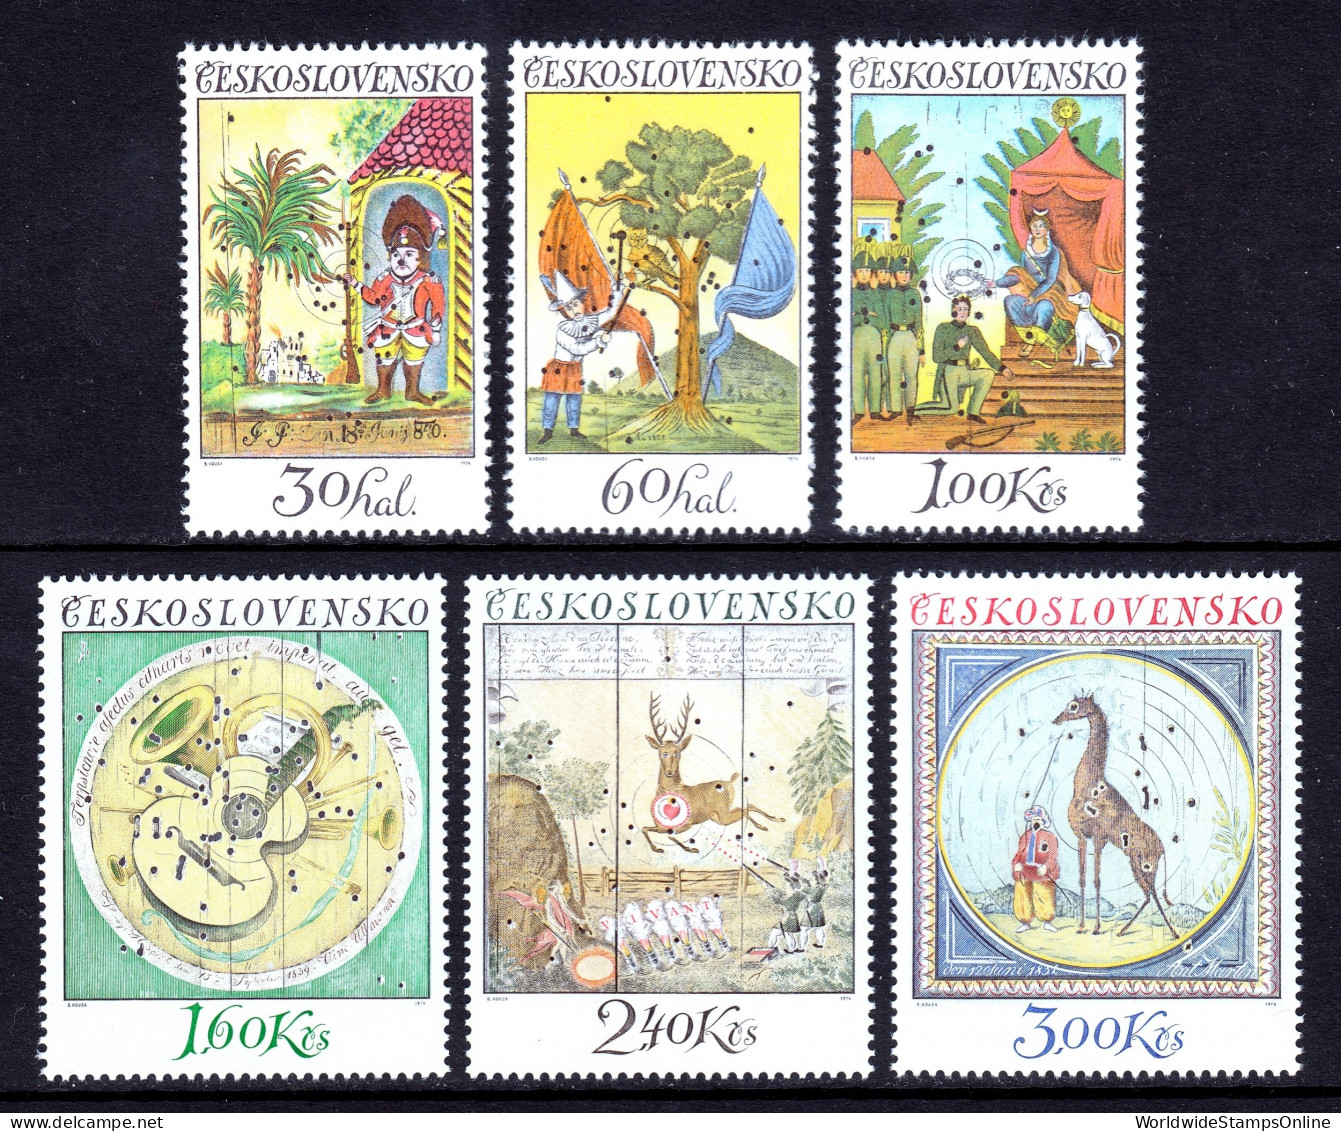 Czechoslovakia - Scott #1956-1961 - MNH - SCV $5.20 - Unused Stamps